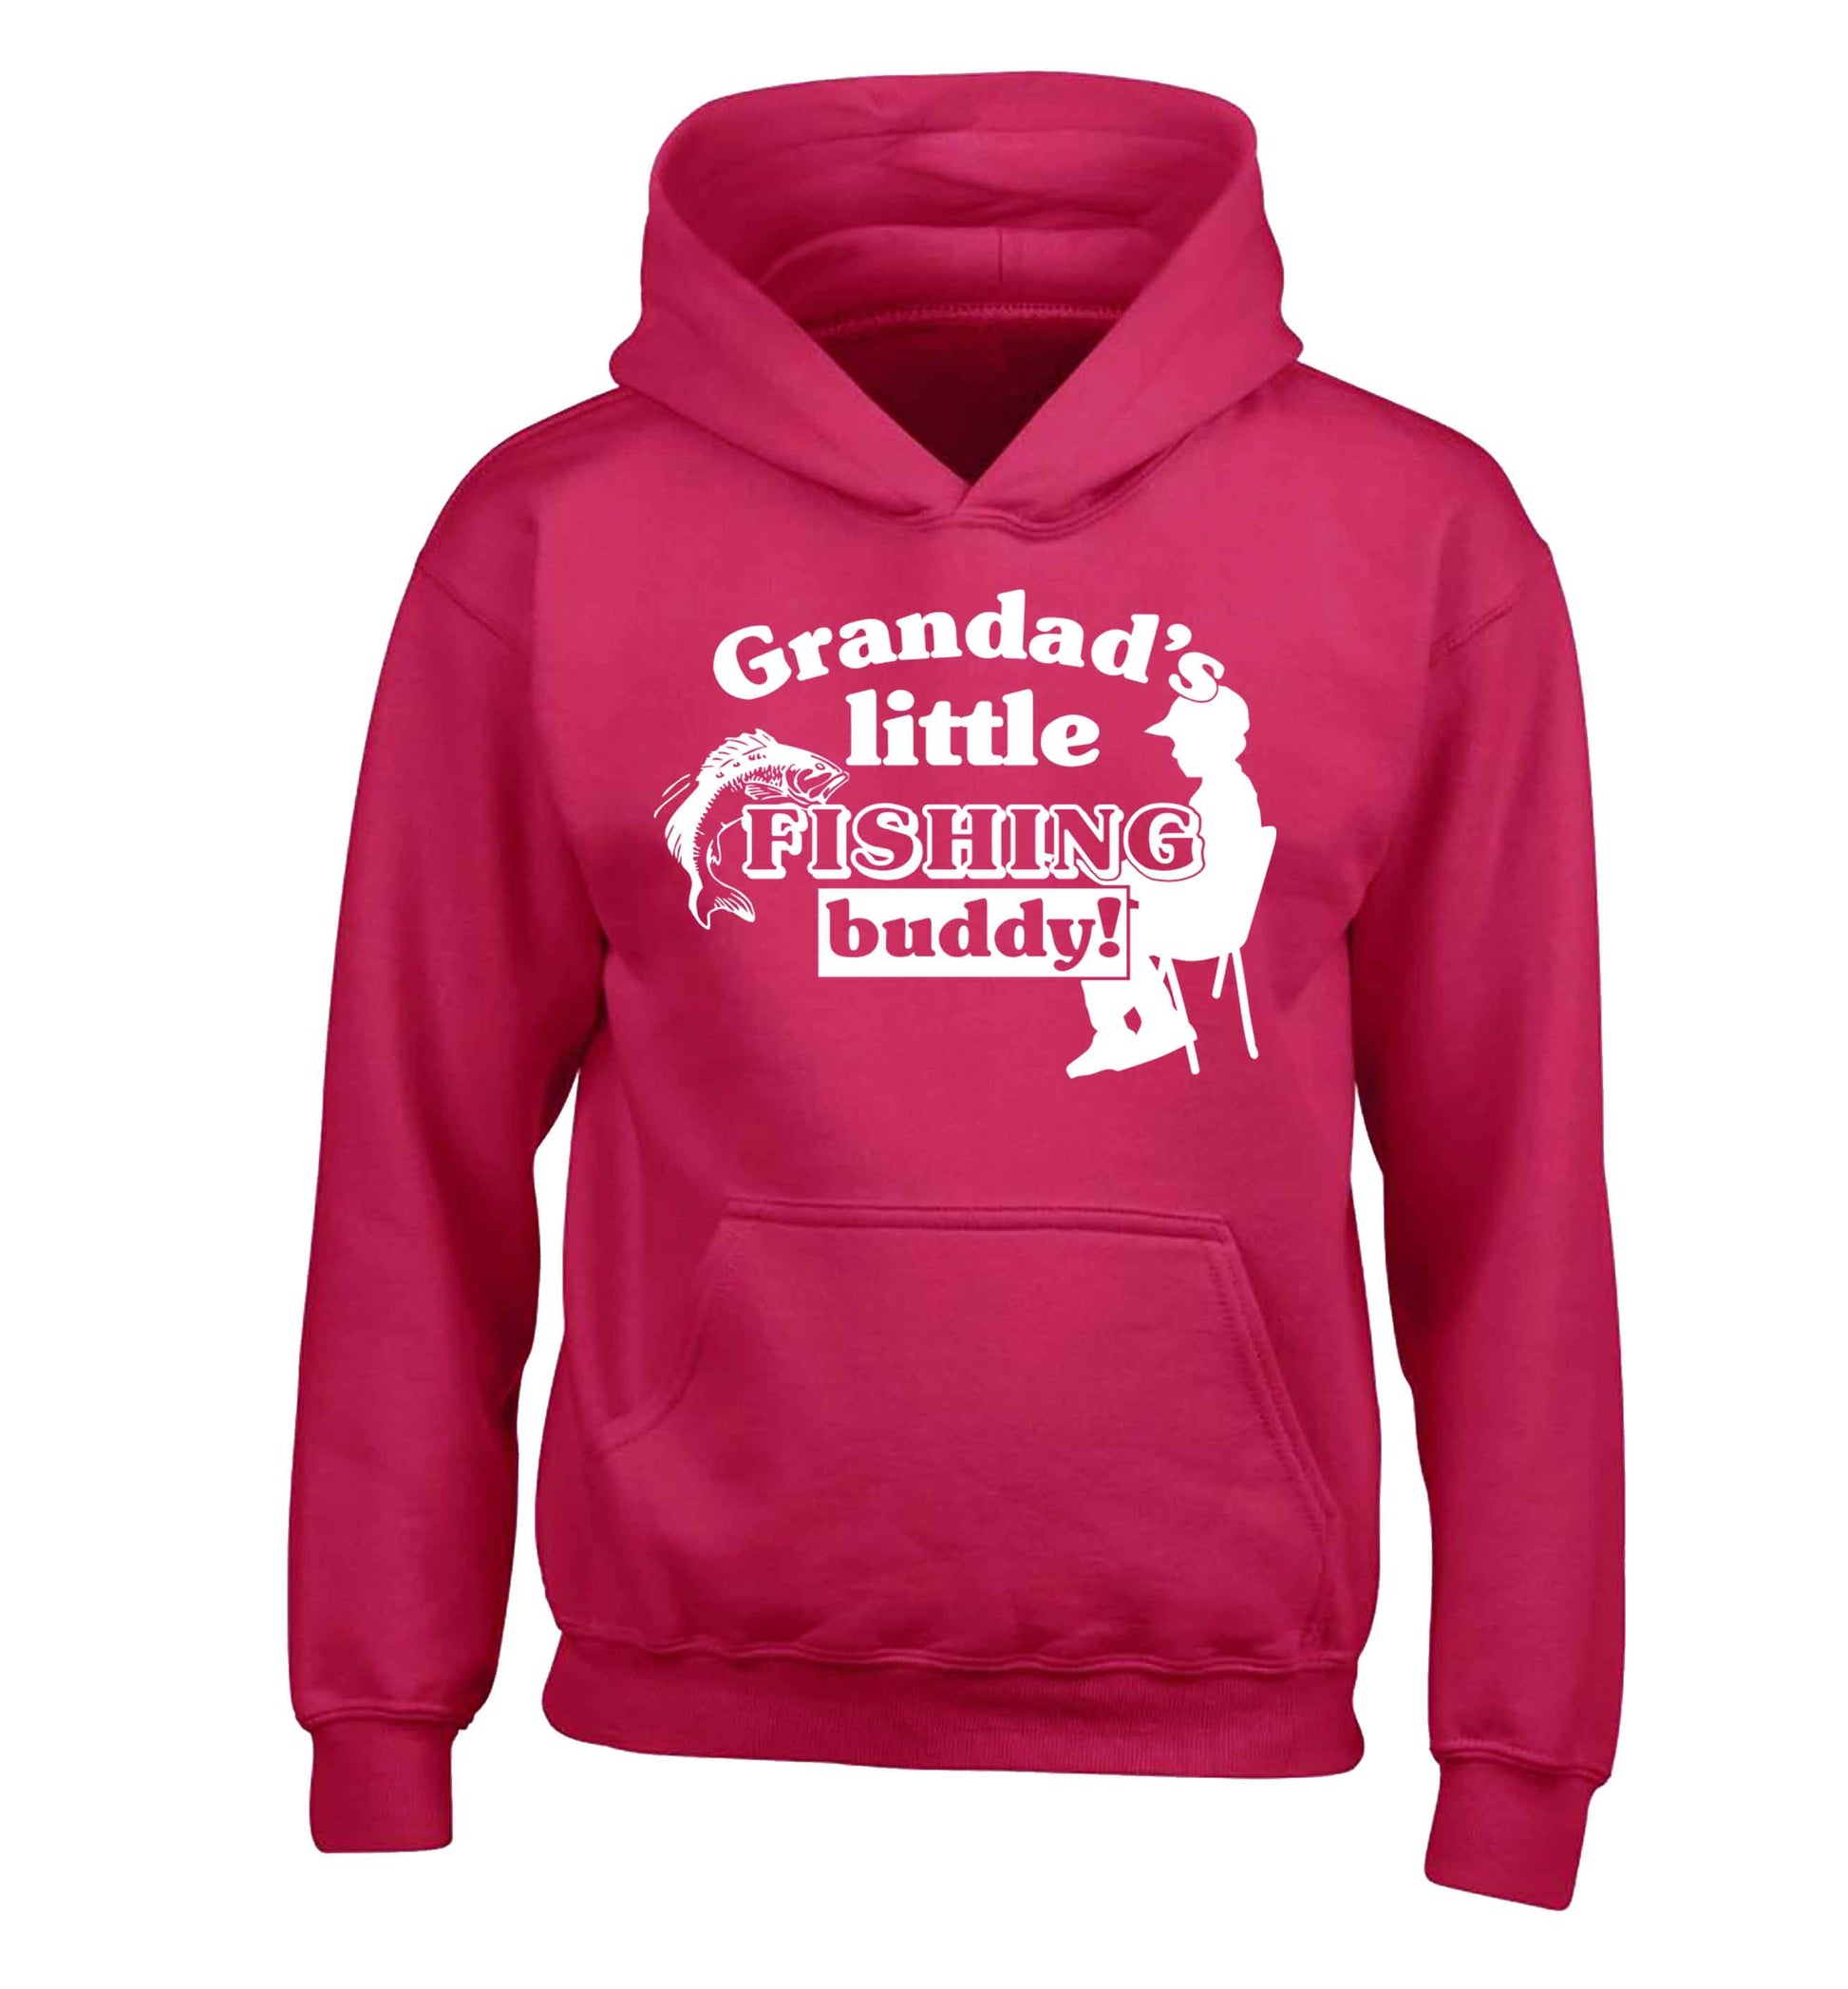 Grandad's little fishing buddy! children's pink hoodie 12-13 Years